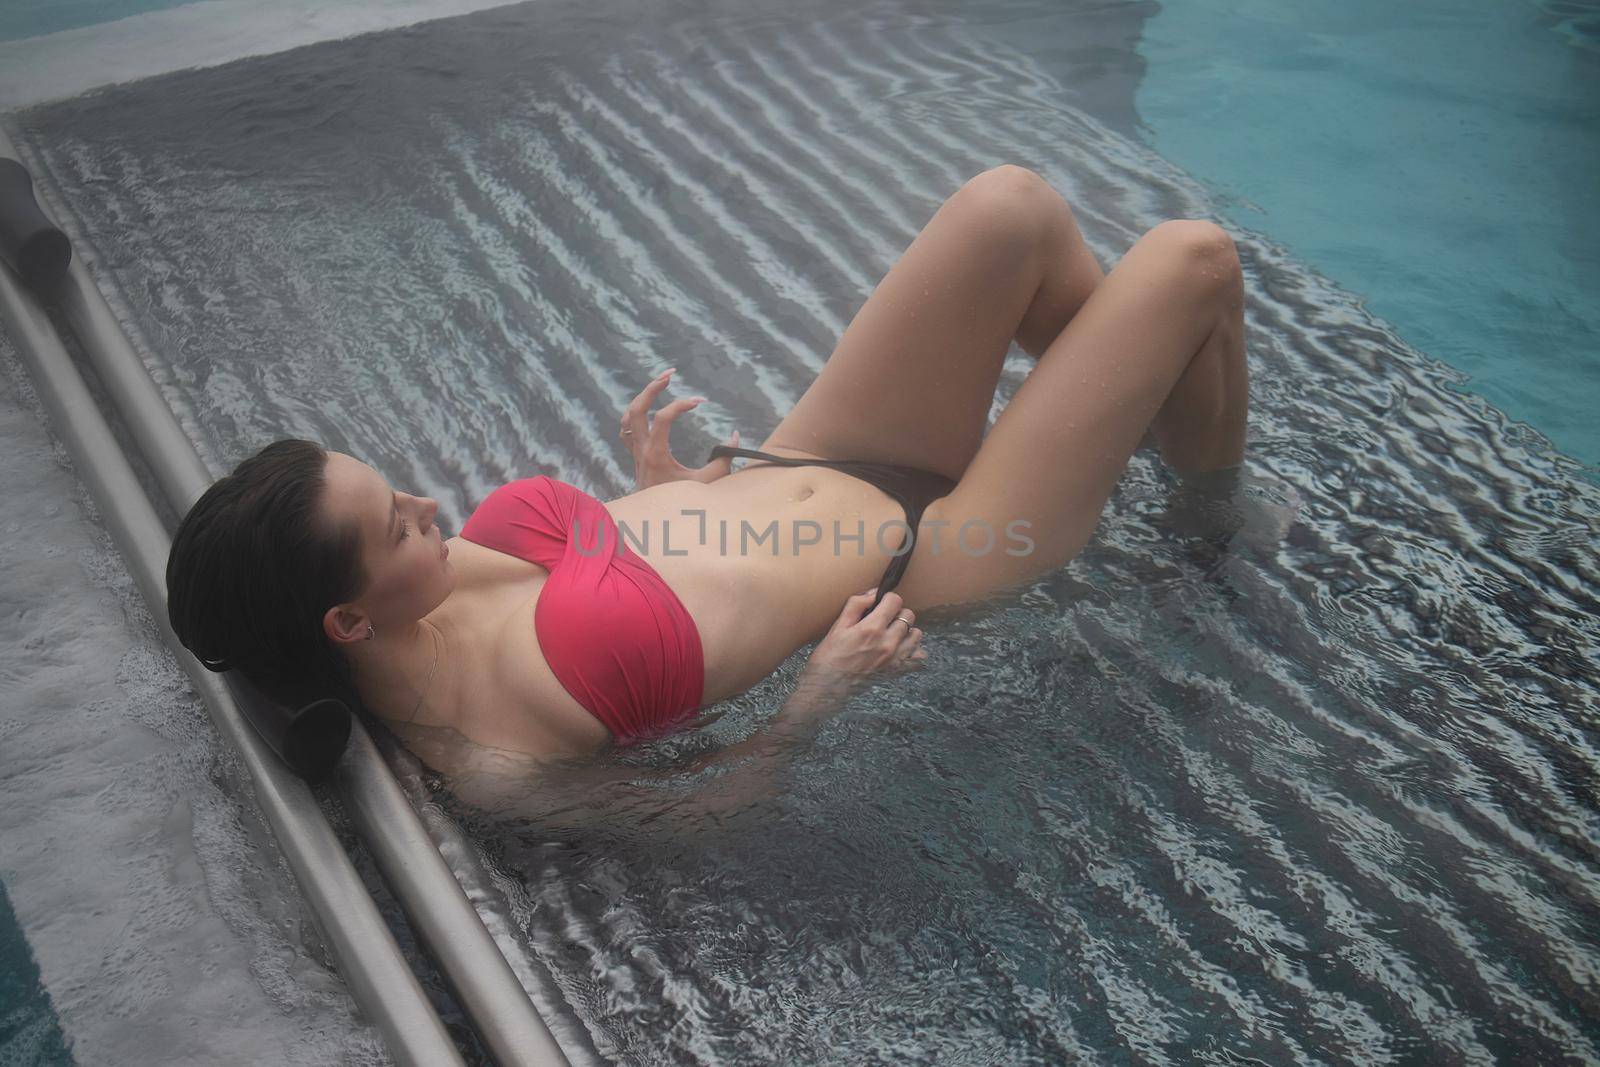 Seductive female resting in pool by 3KStudio